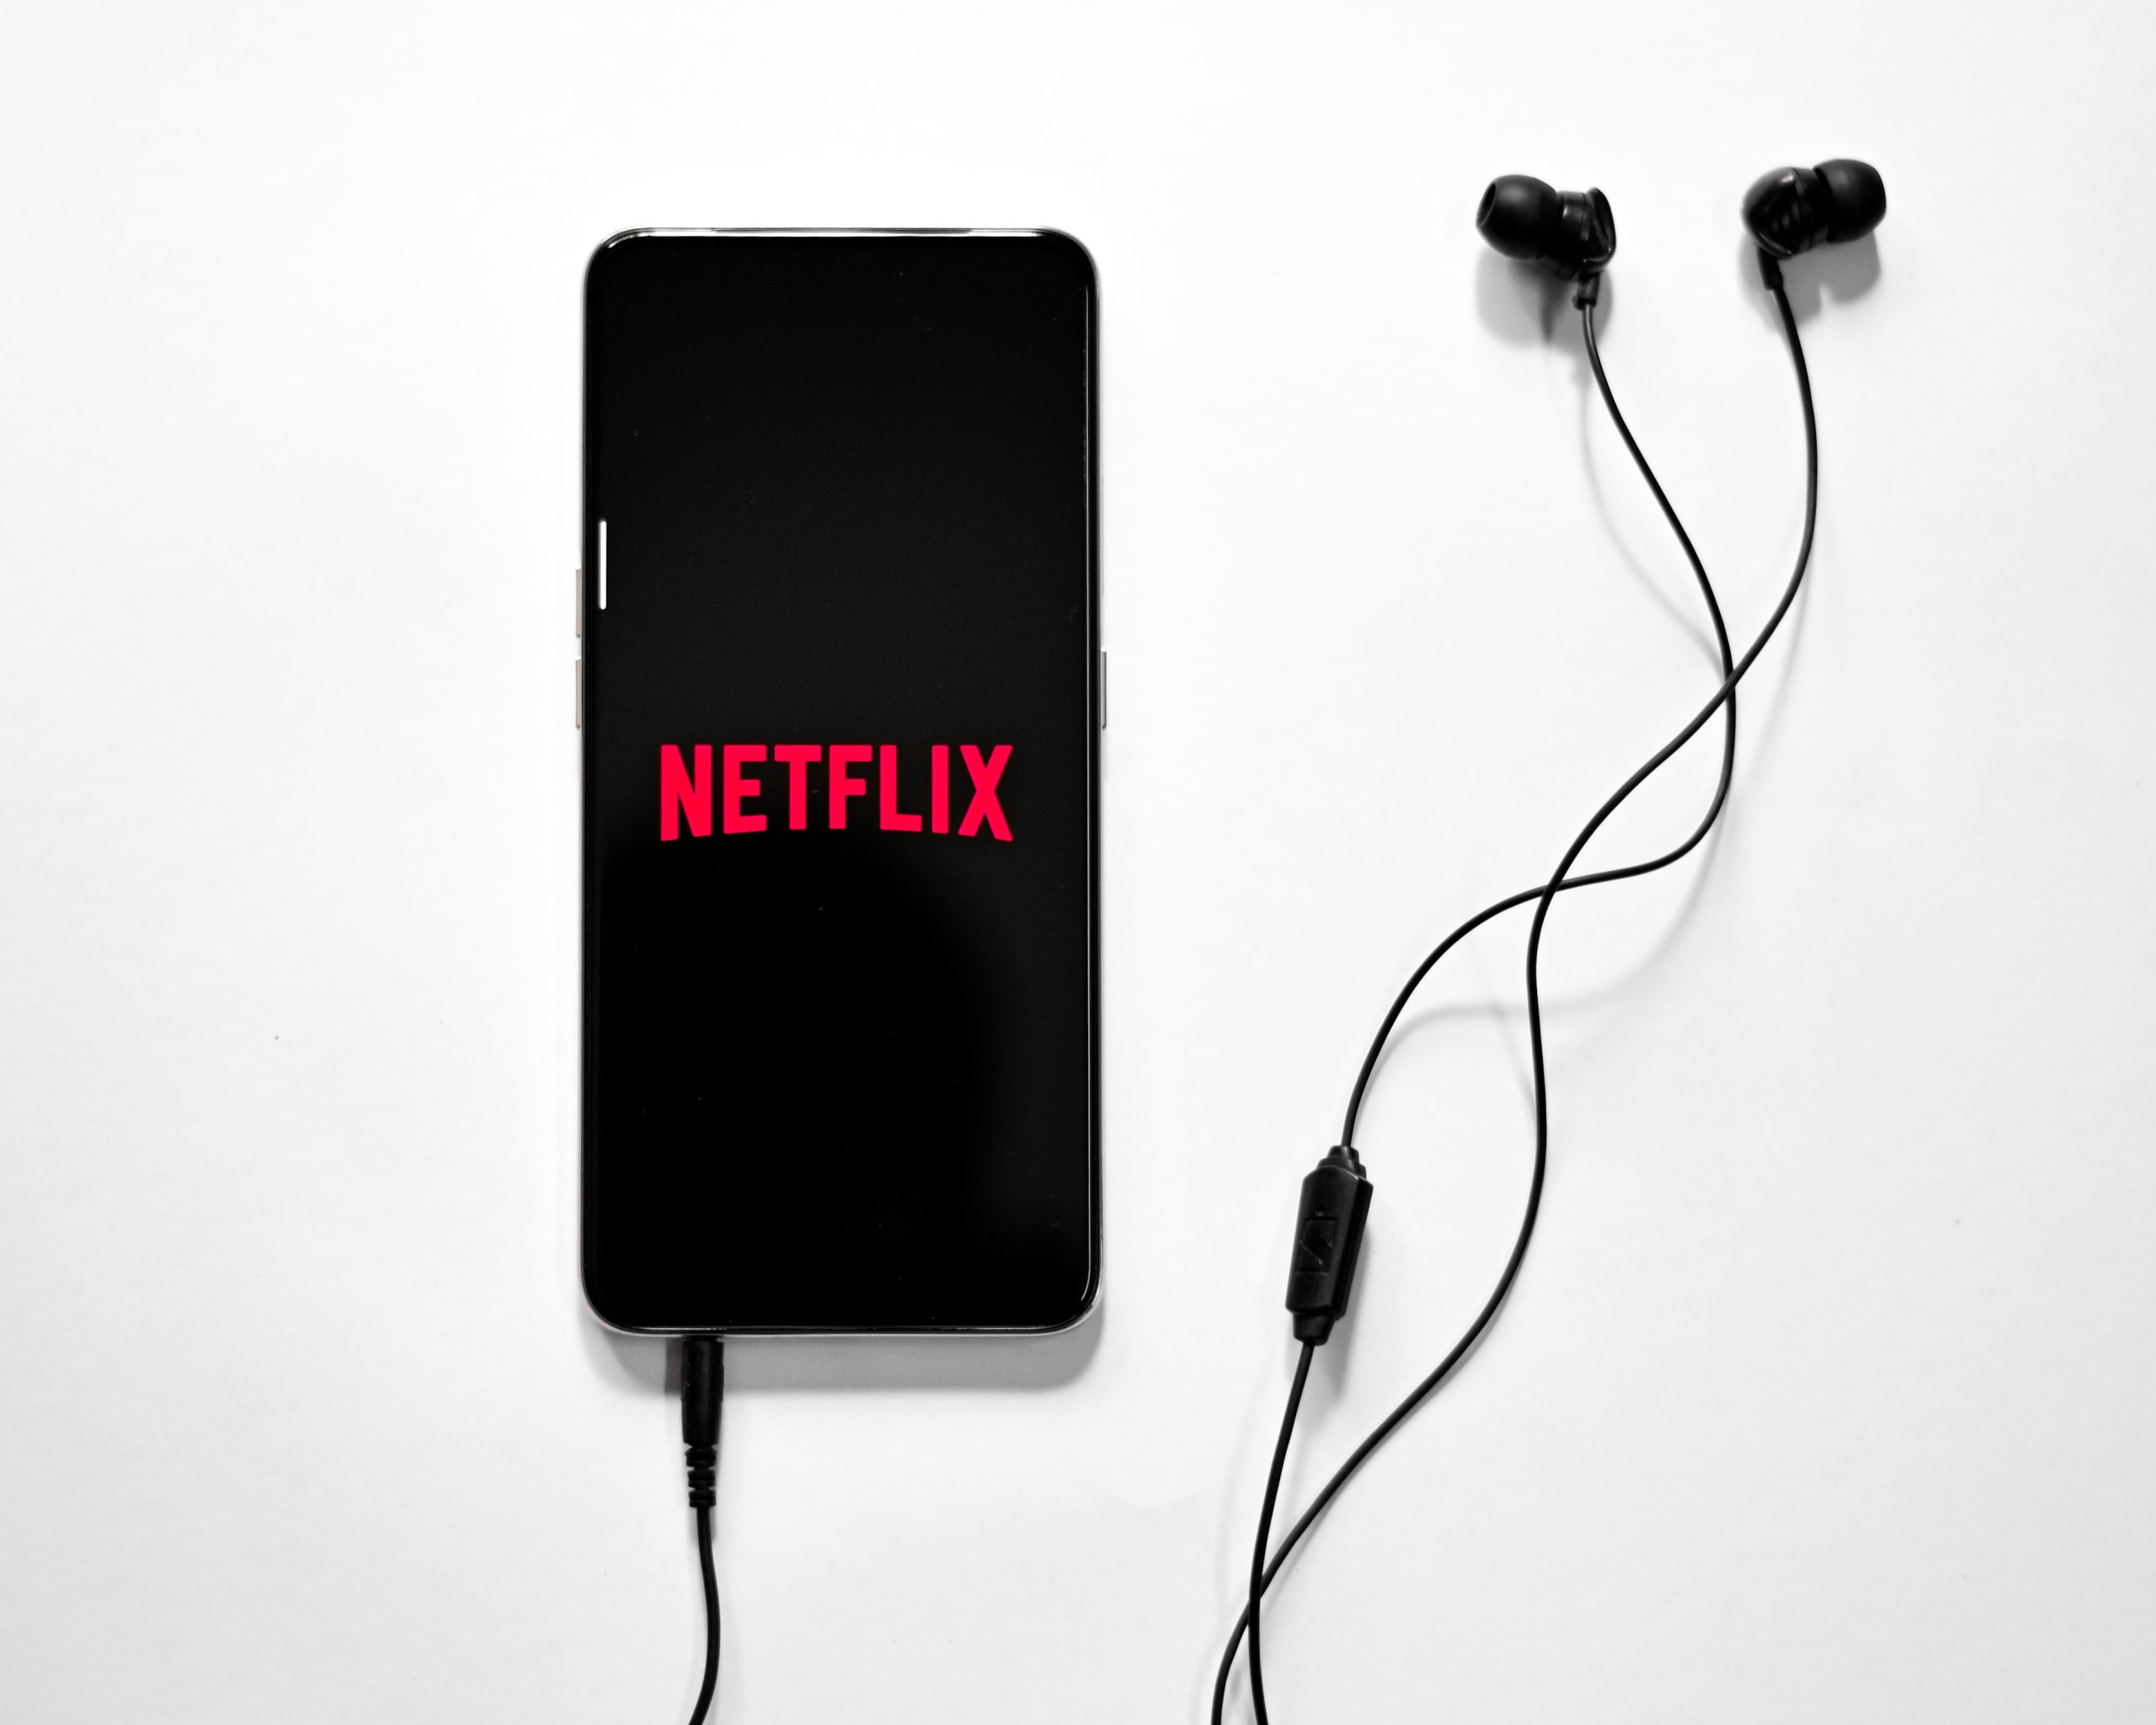 Netflix logo on mobile screen